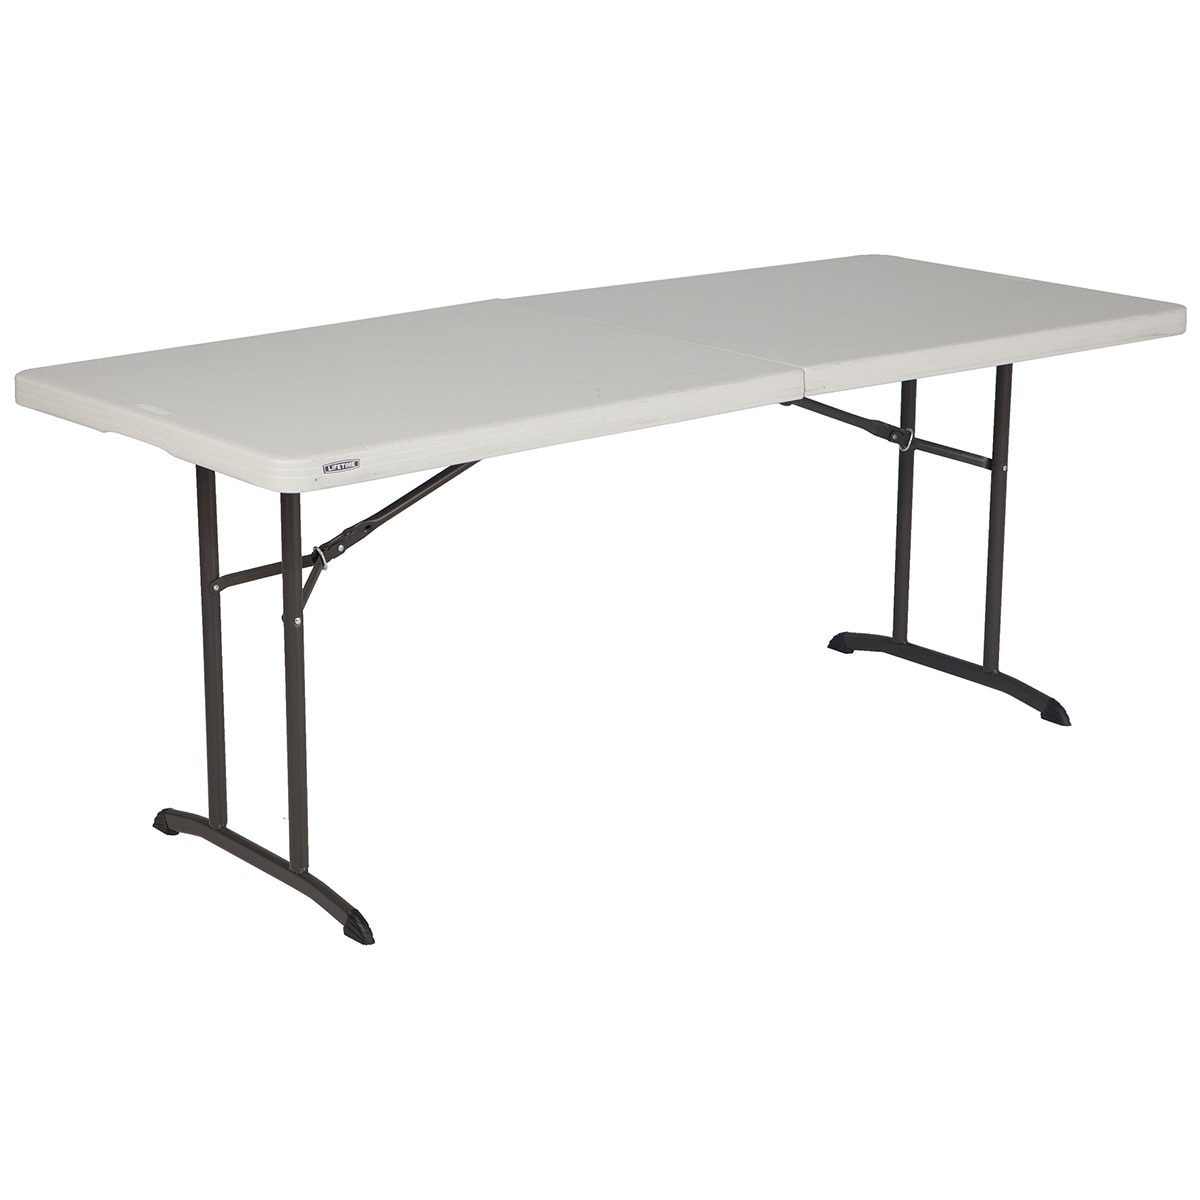 Lifetime 182 9cm Folding Table Costco Australia